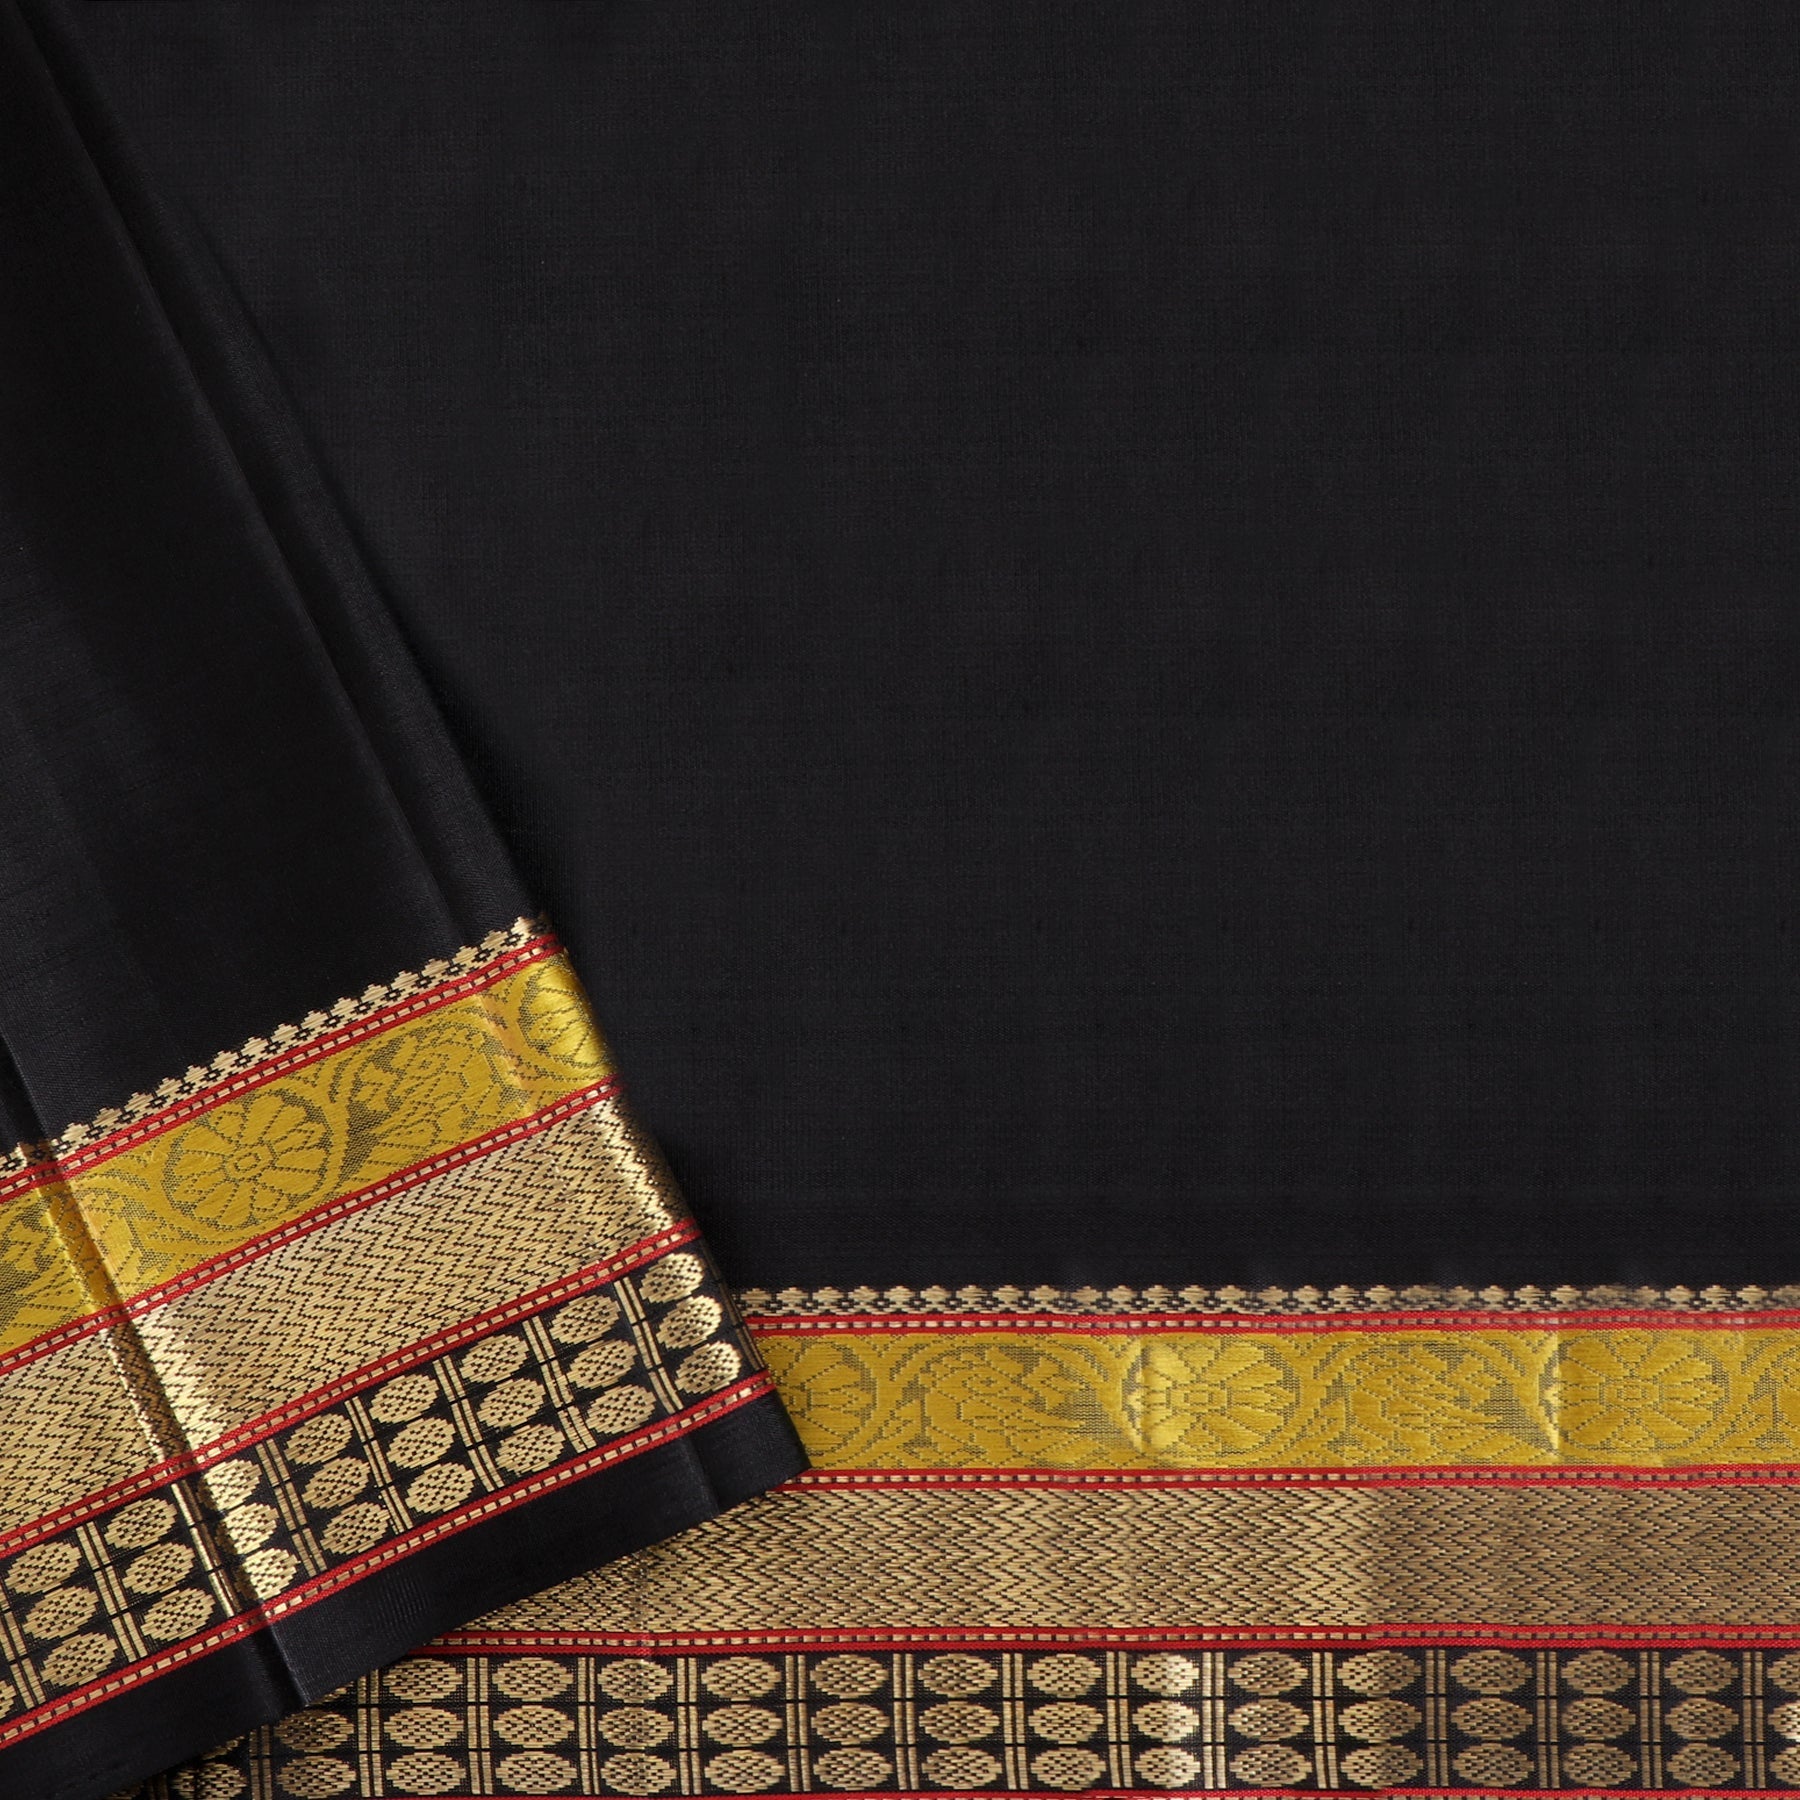 Kanakavalli Kanjivaram Silk Sari 21-040-HS001-00653 - Blouse View